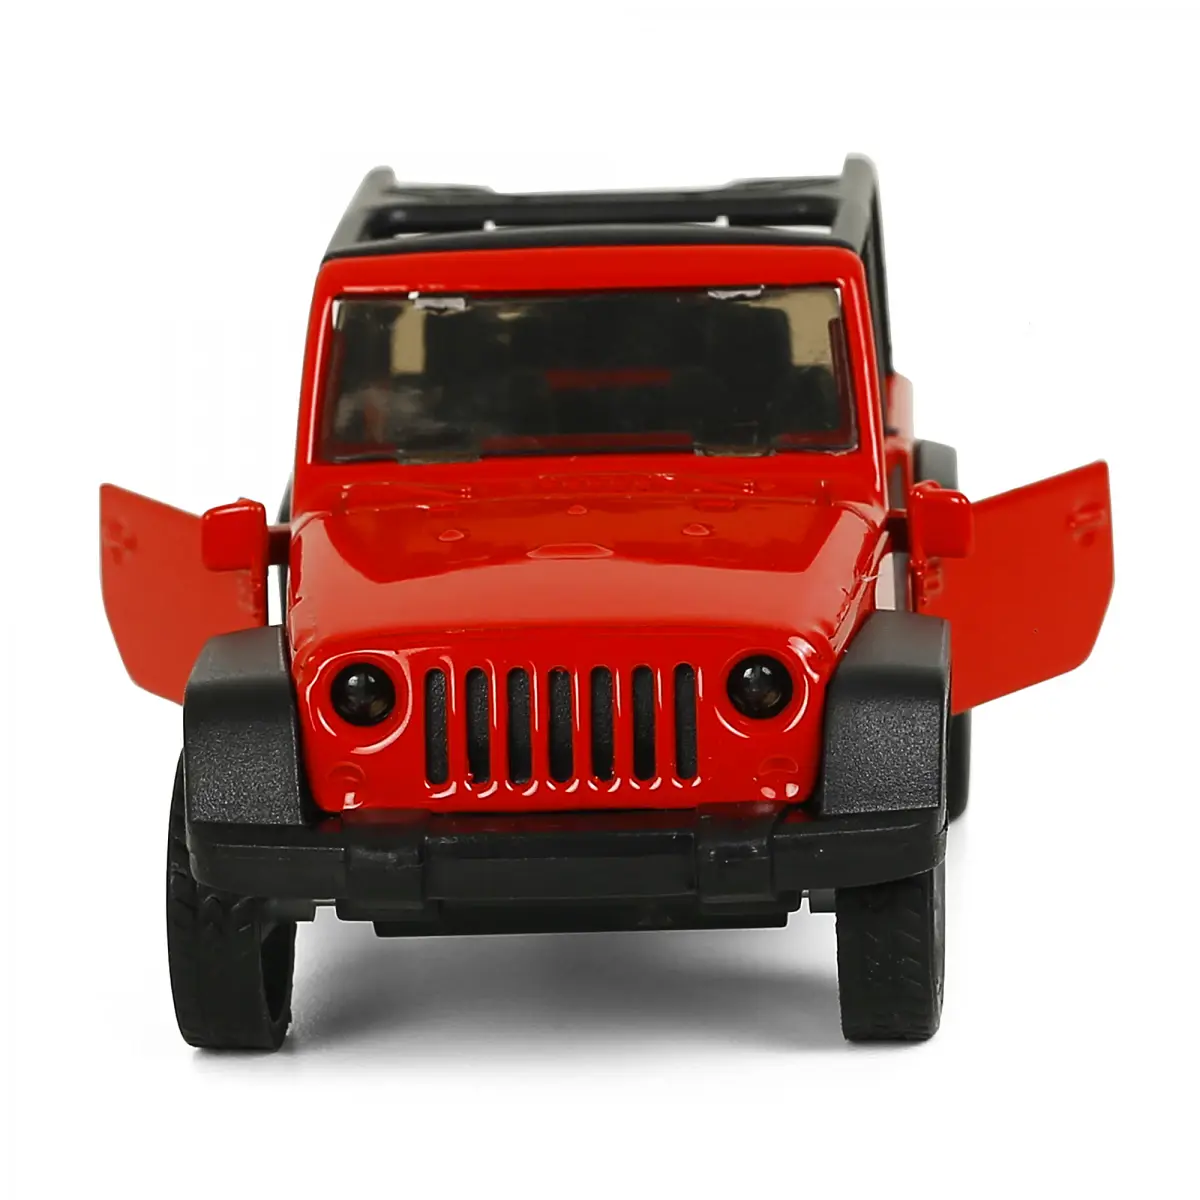 Ralleyz Pull Back Die Cast Model Jeep, 3Y+, Red